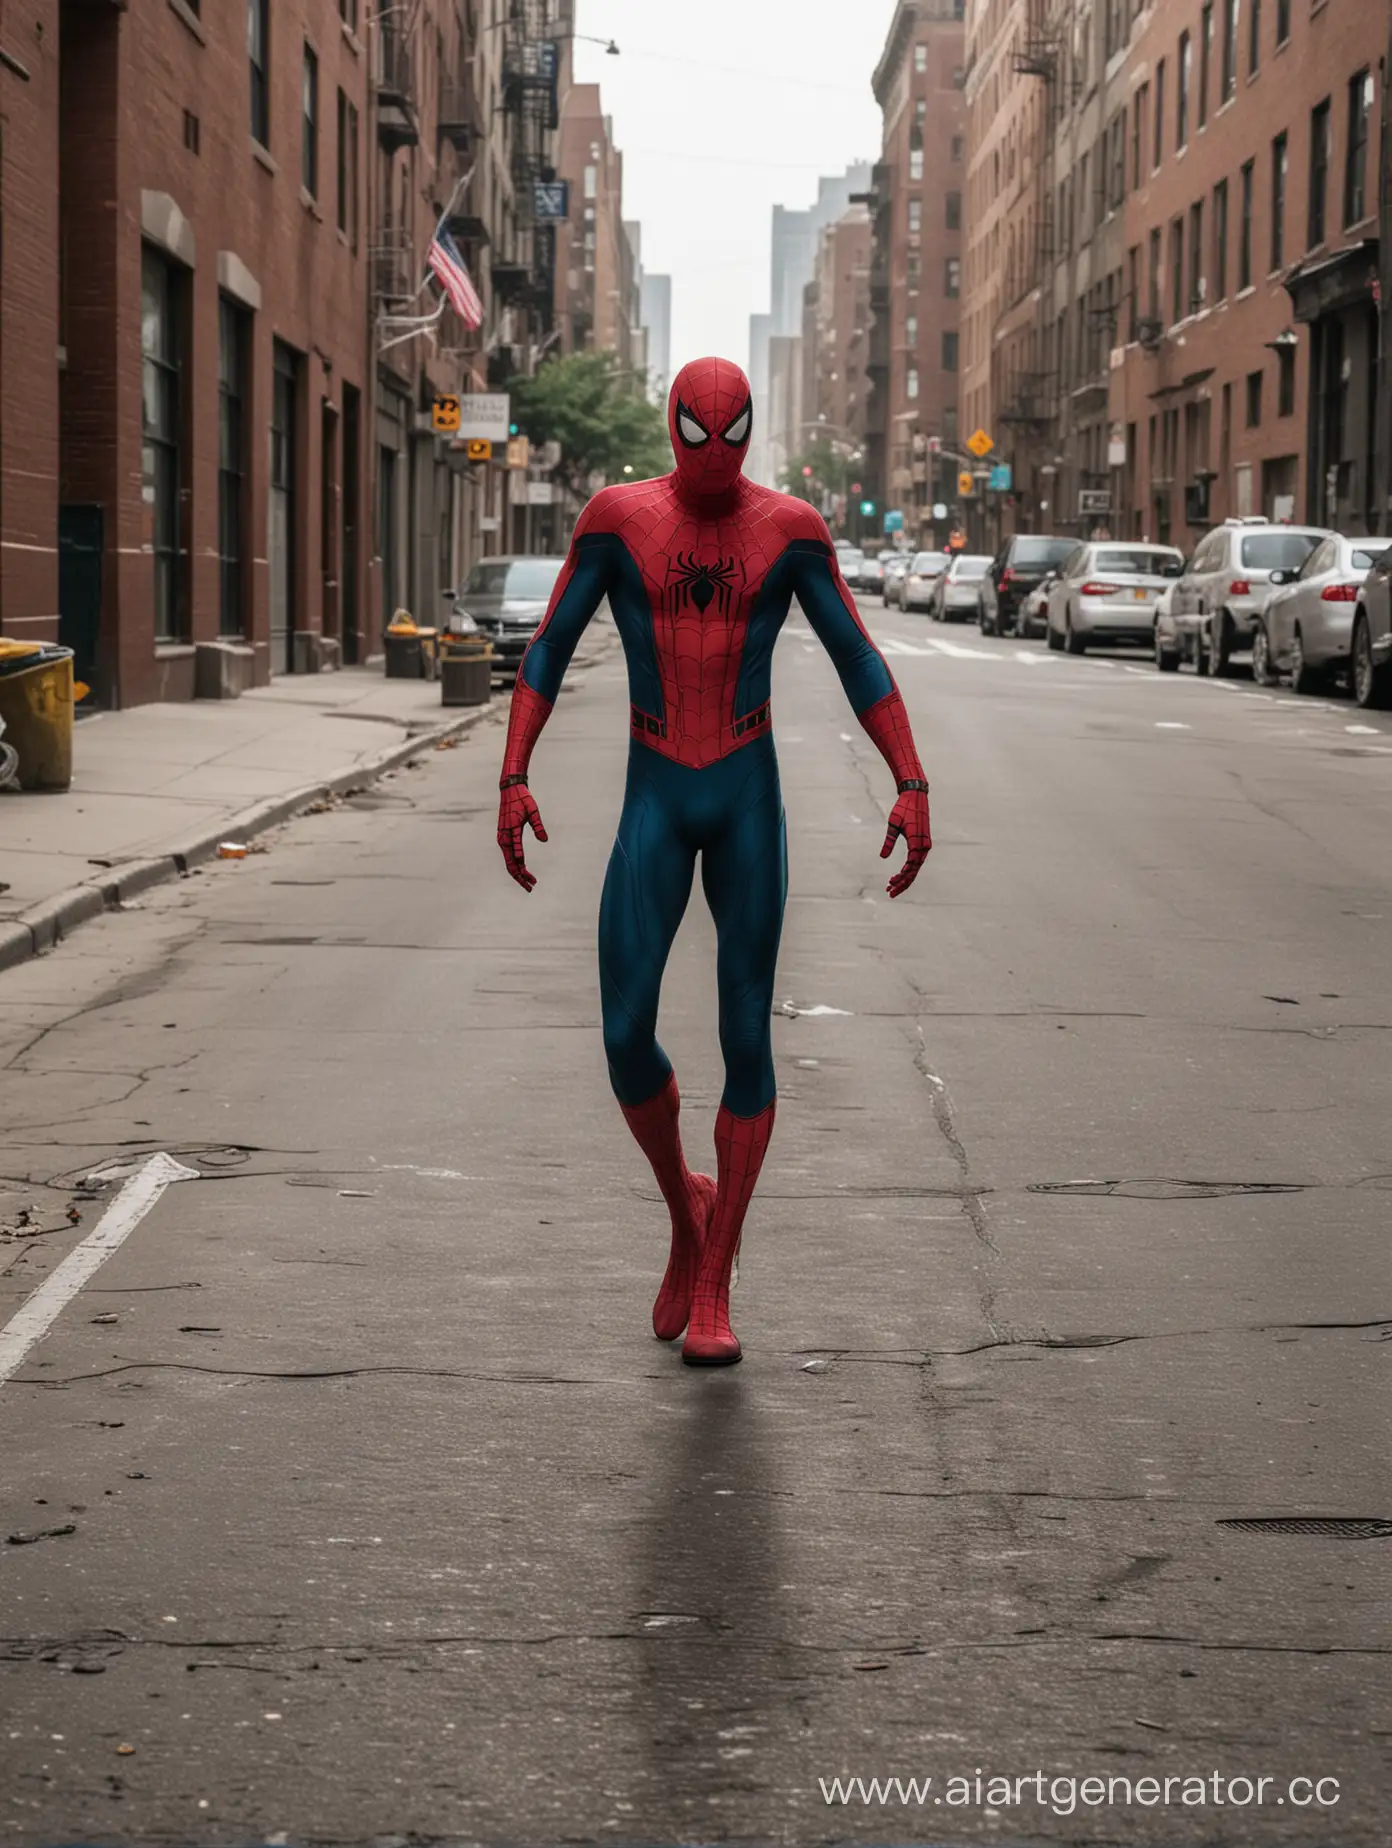 Spider-Man is walking down the street